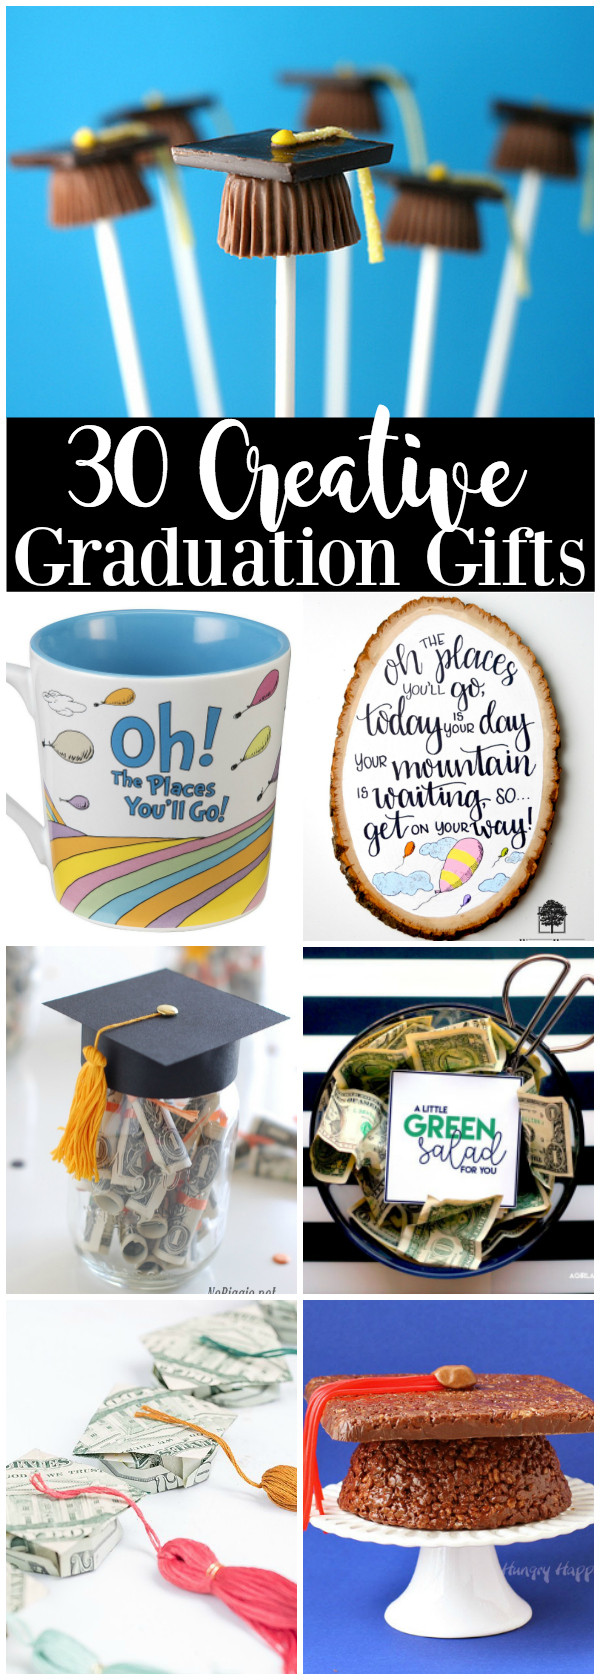 Ideas For A Graduation Gift
 30 Creative Graduation Gift Ideas